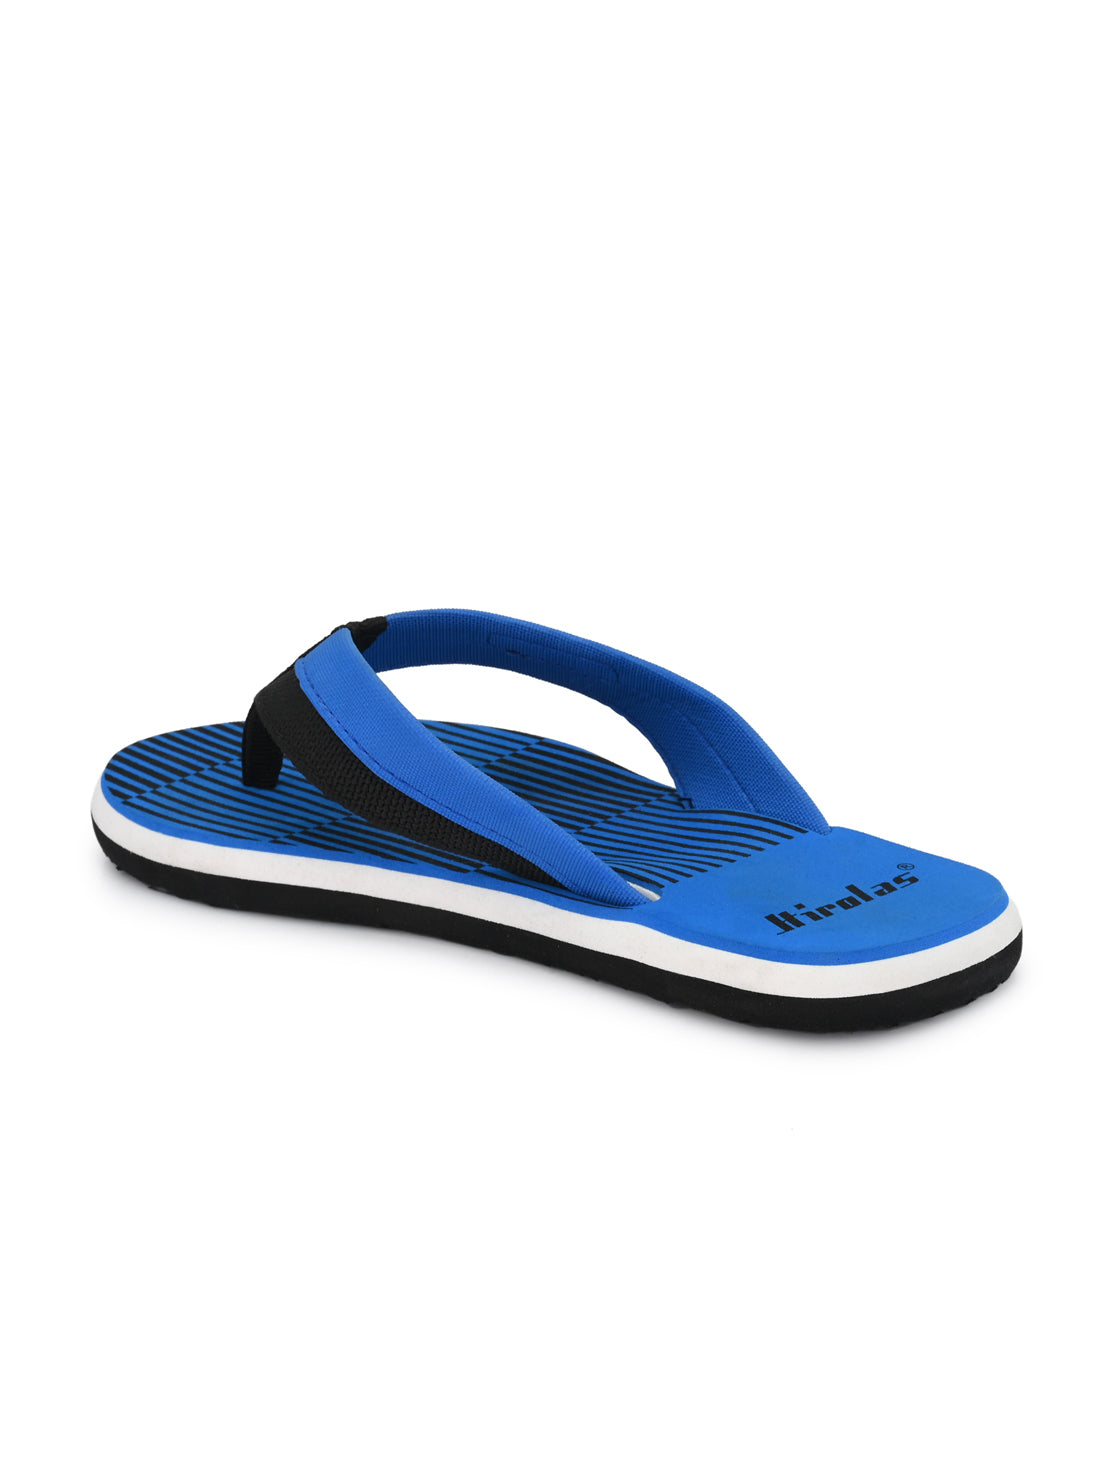 Hirolas® Men's Blue Fabrication Combortable Flip-Flops (HROFF12BLU)